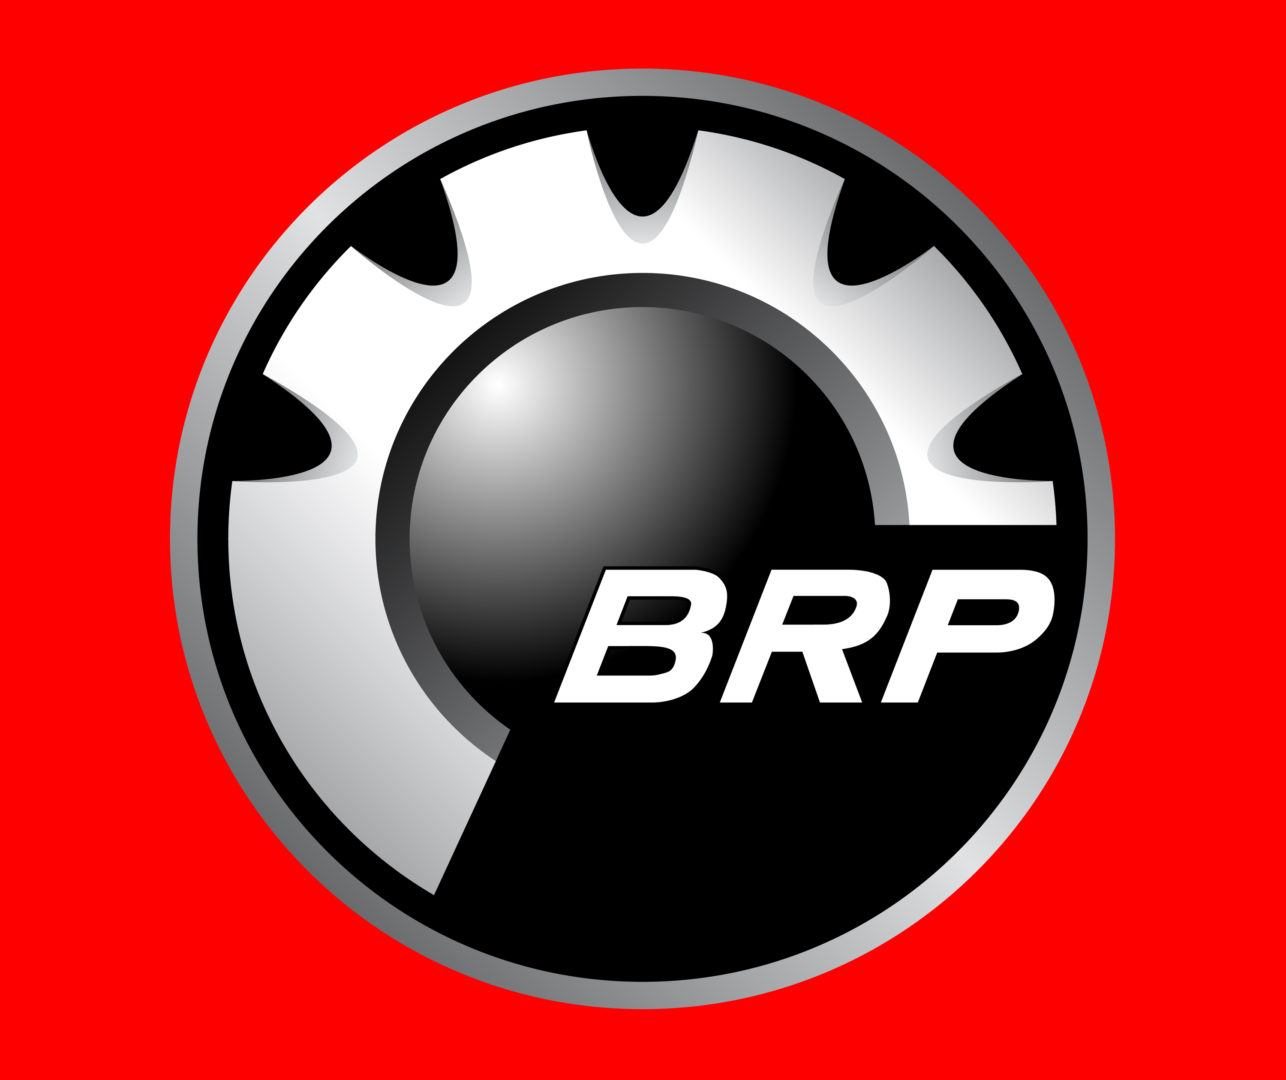 BRP motorcycle logo